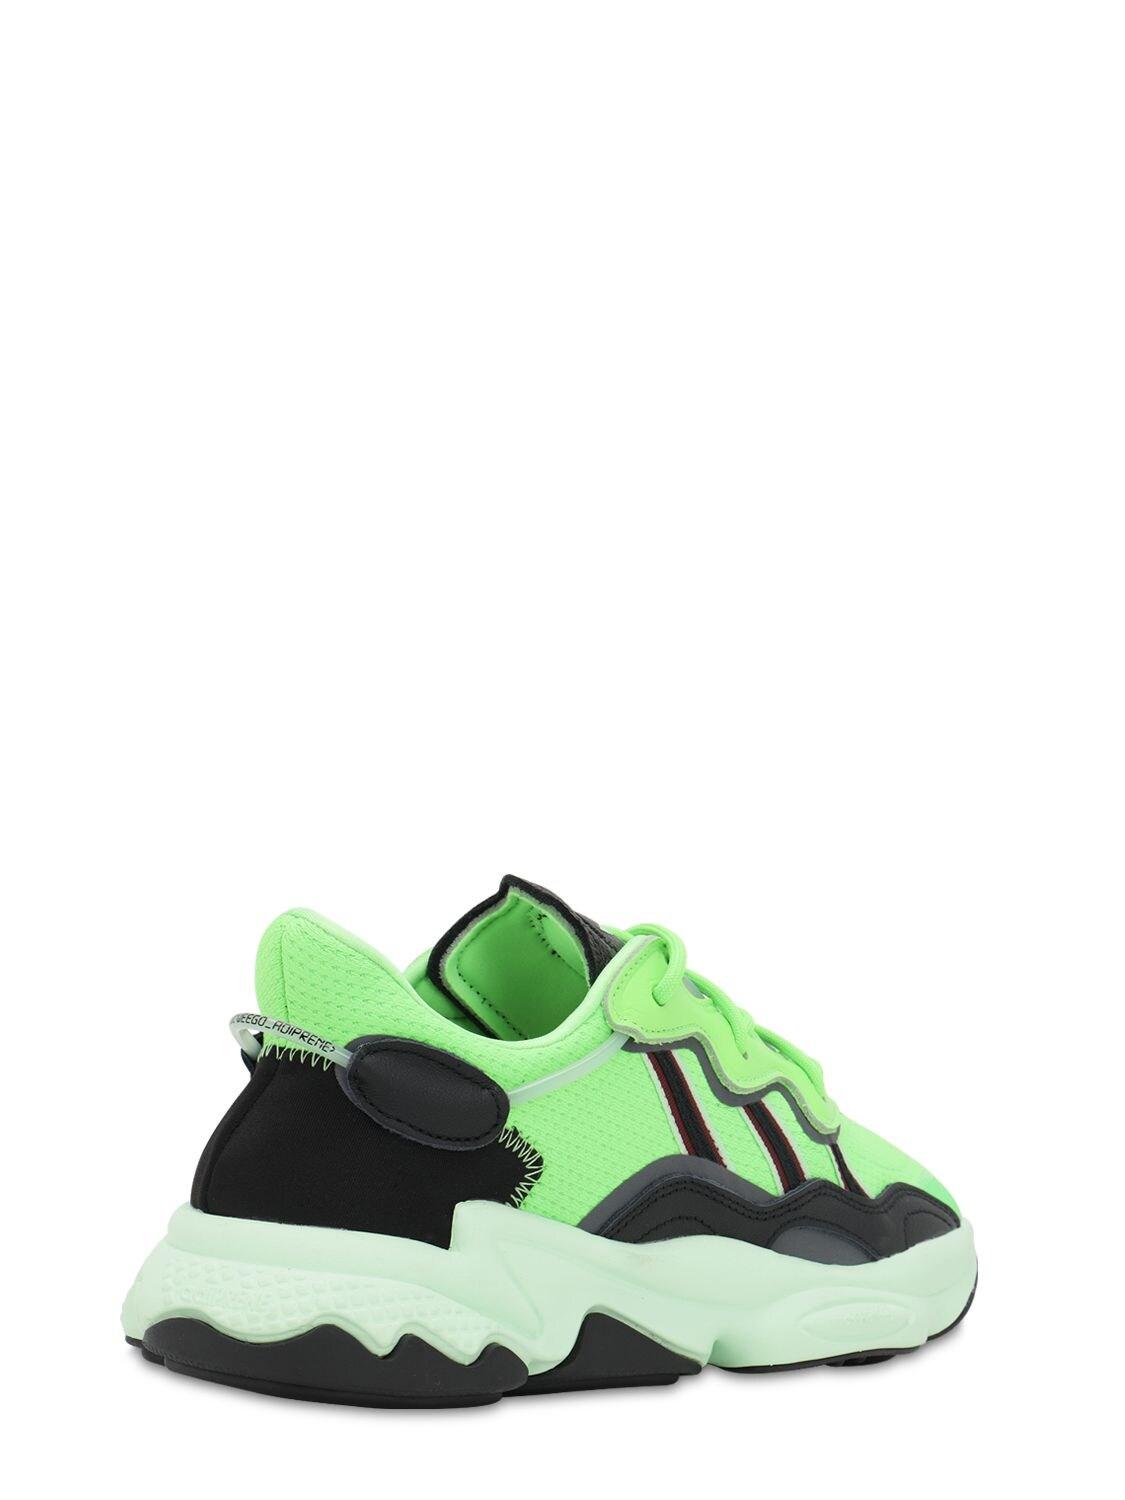 adidas Originals Oz Prene Mesh & Suede Sneakers in Black/Orange (Green ...